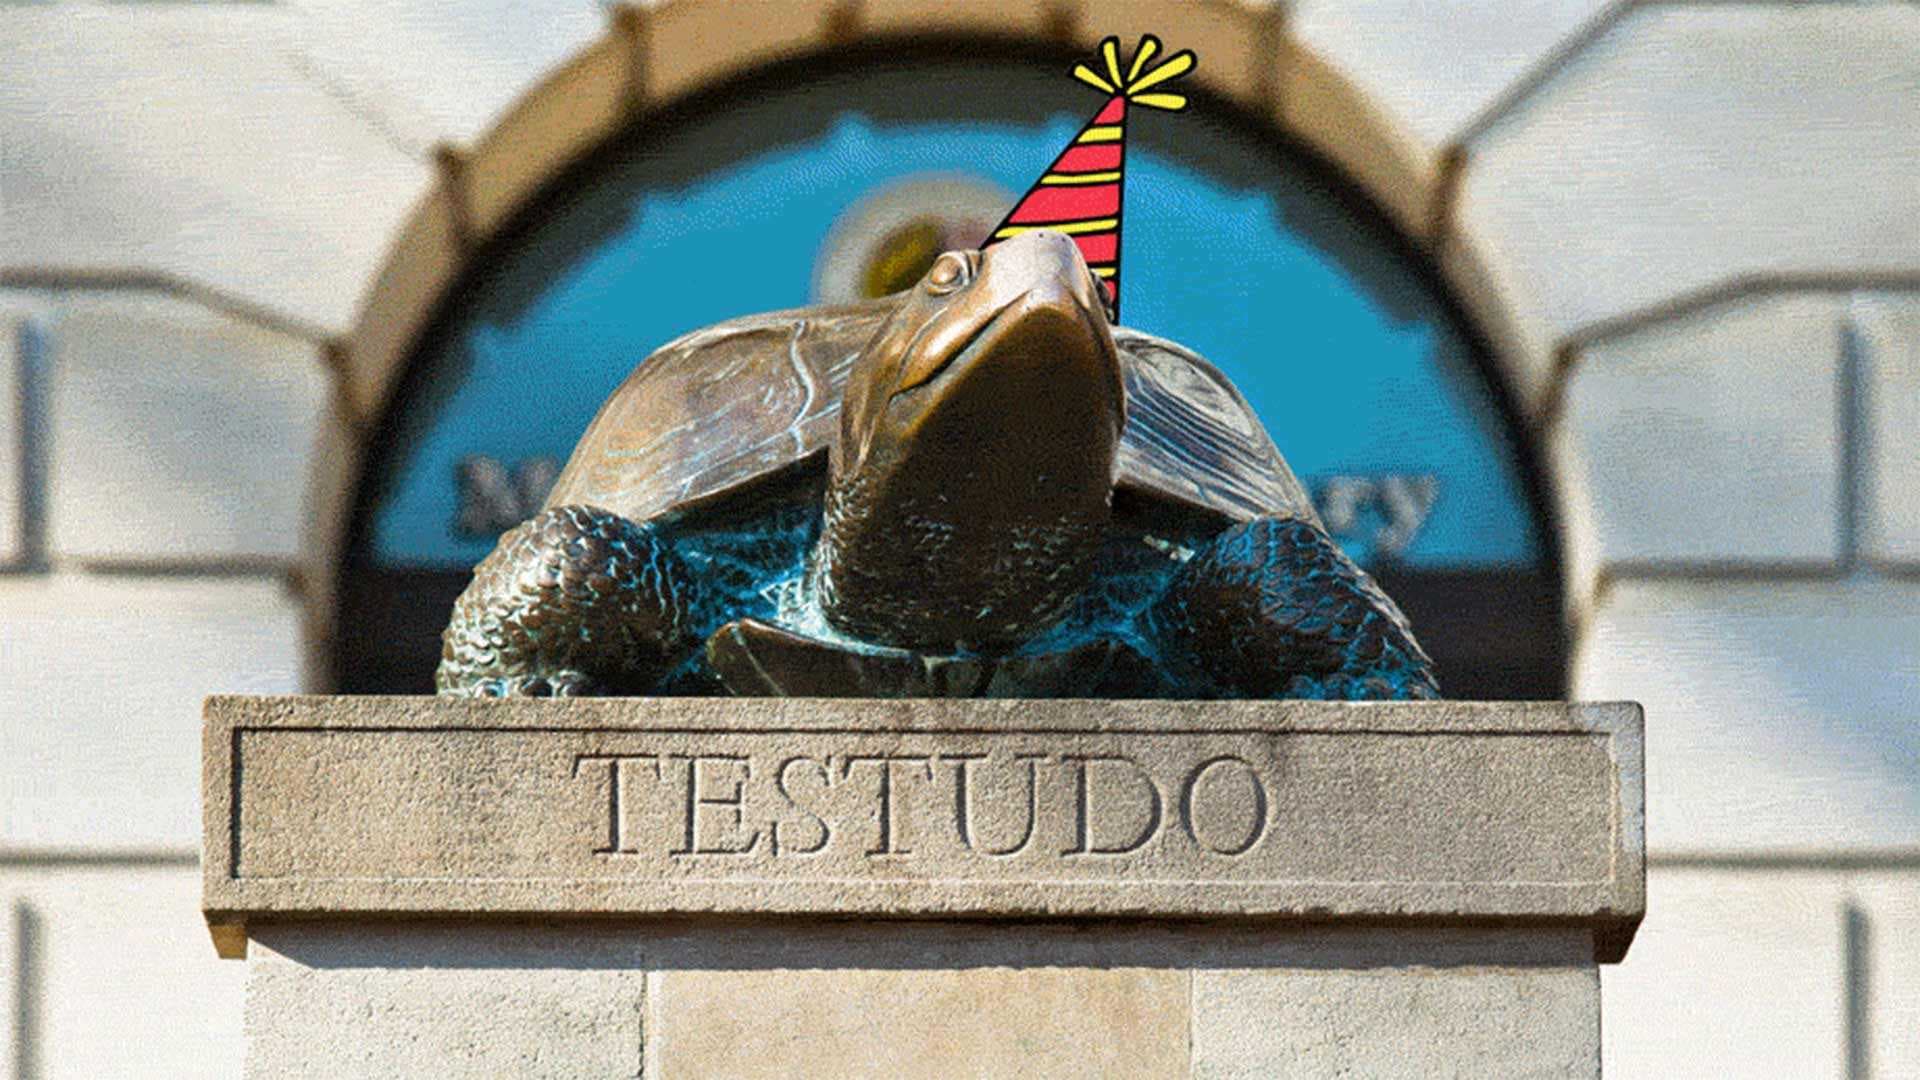 Testudo statue with birthday hat